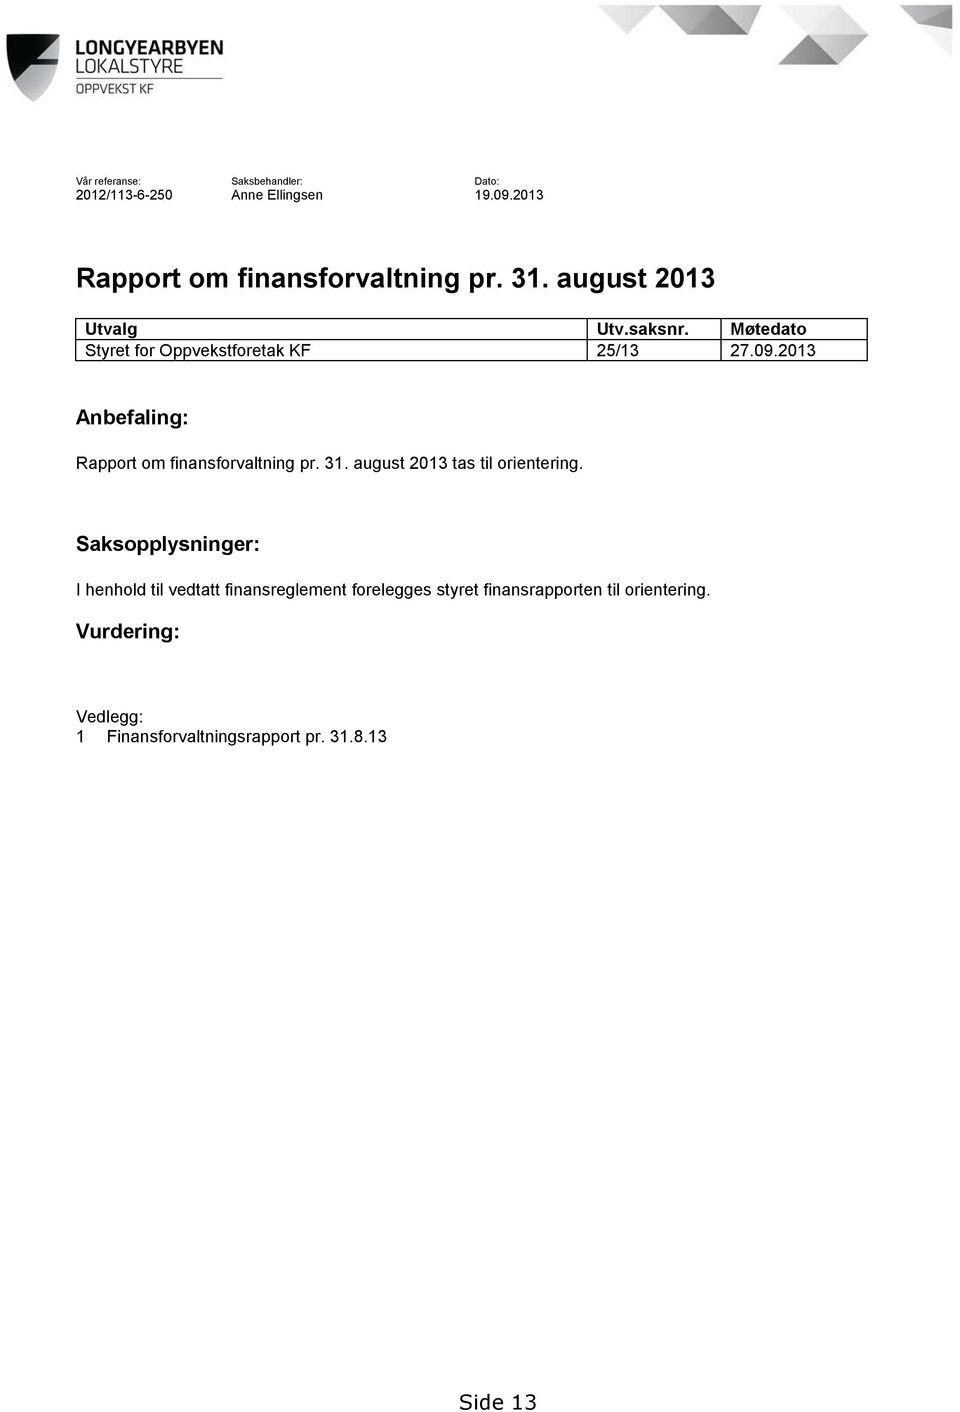 2013 Anbefaling: Rapport om finansforvaltning pr. 31. august 2013 tas til orientering.